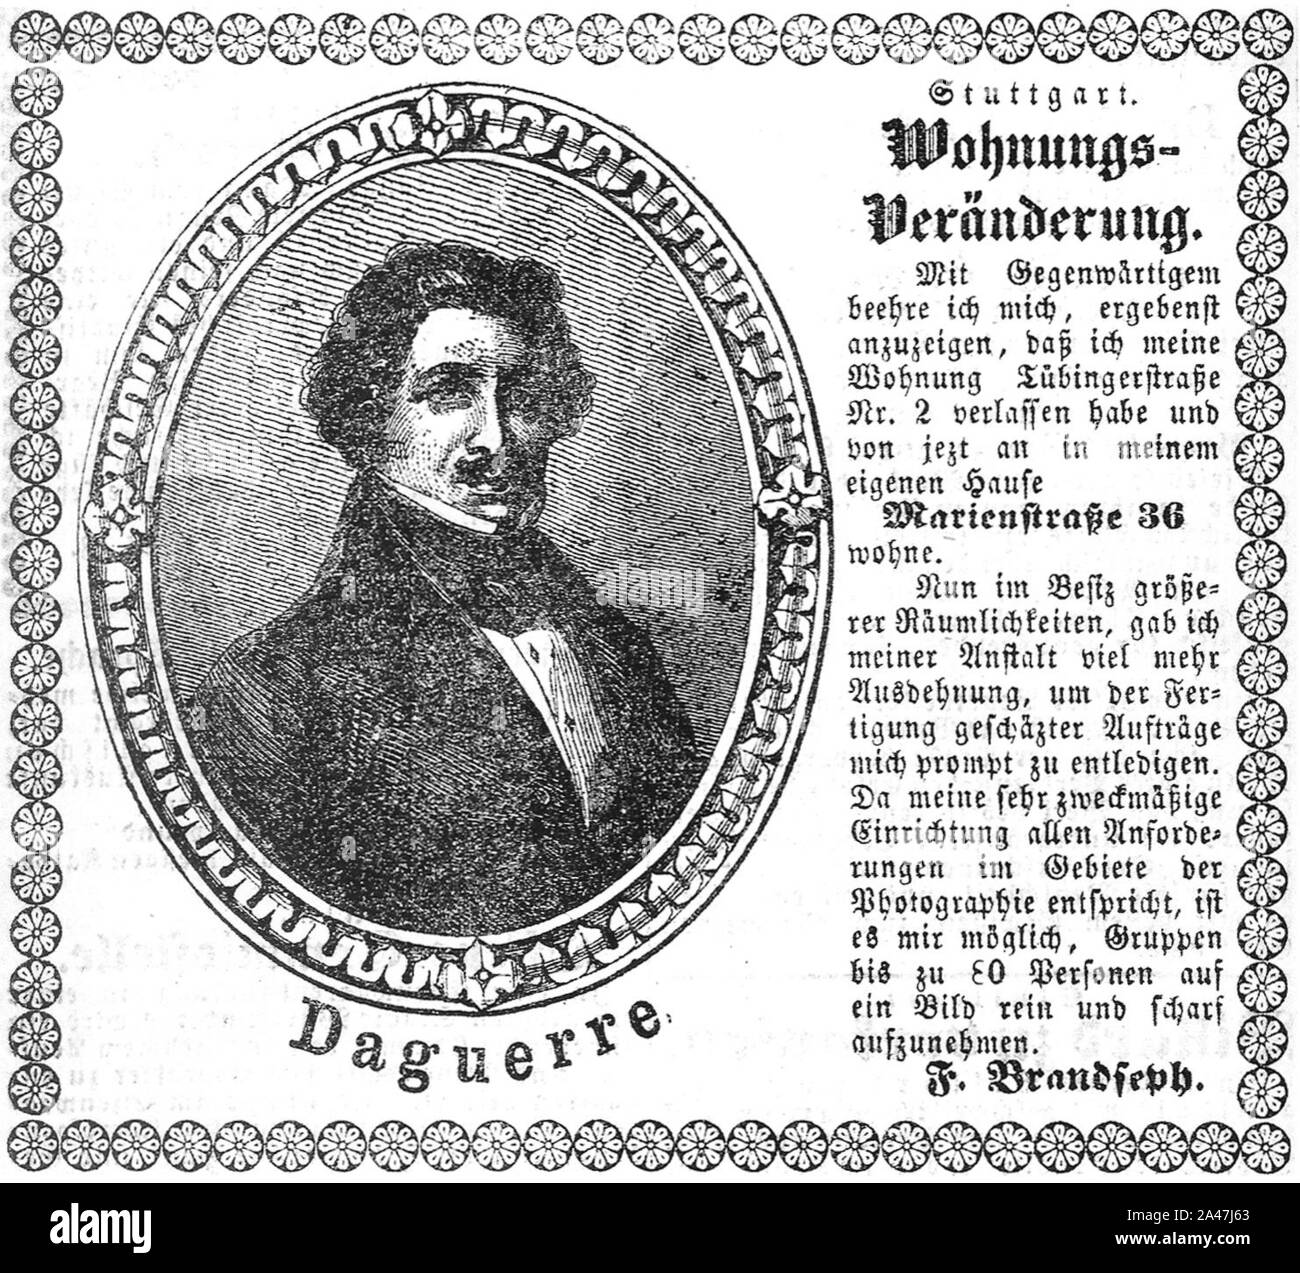 FBrandseph-Anzeige 1860 (132). Stock Photo